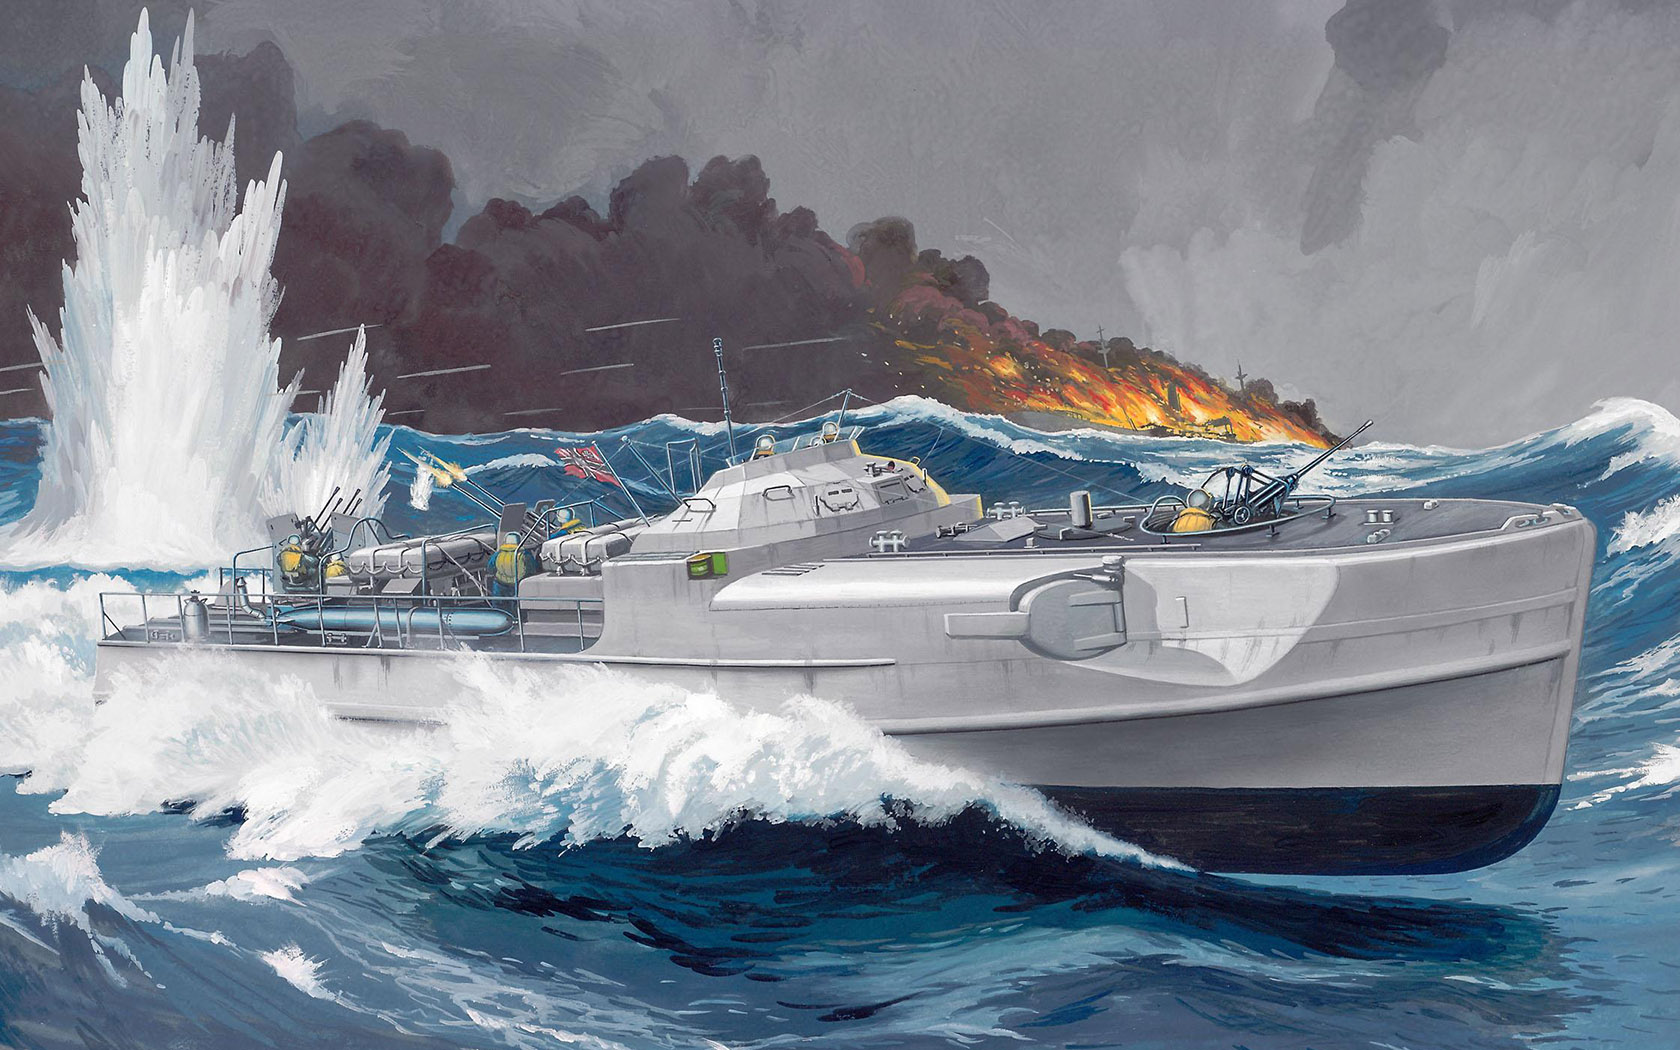 General 1680x1050 warship military fire sky military vehicle water waves smoke flag artwork clouds Kriegsmarine World War II